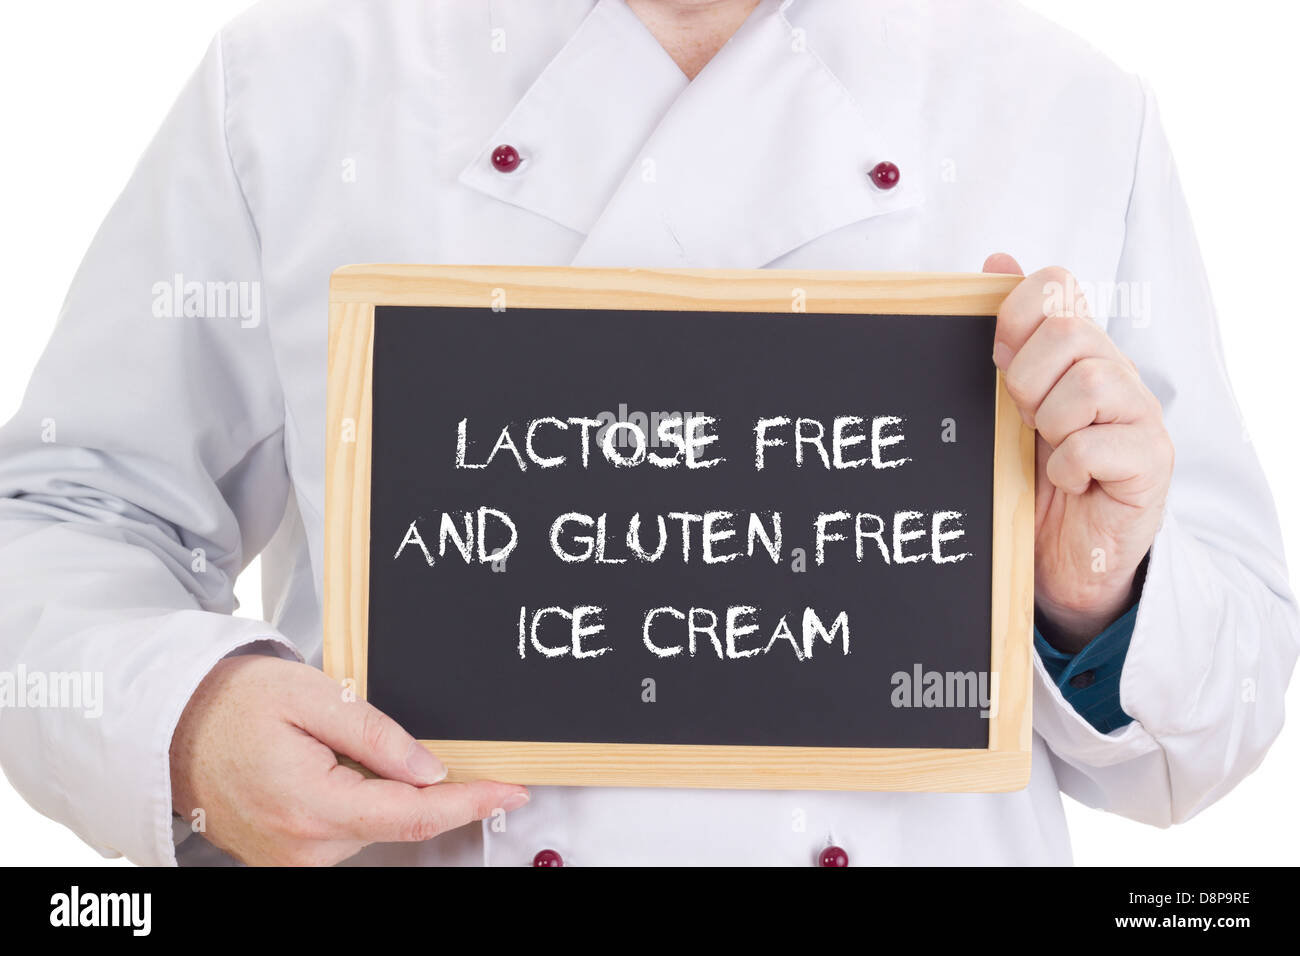 Lactose free and gluten free ice cream Stock Photo